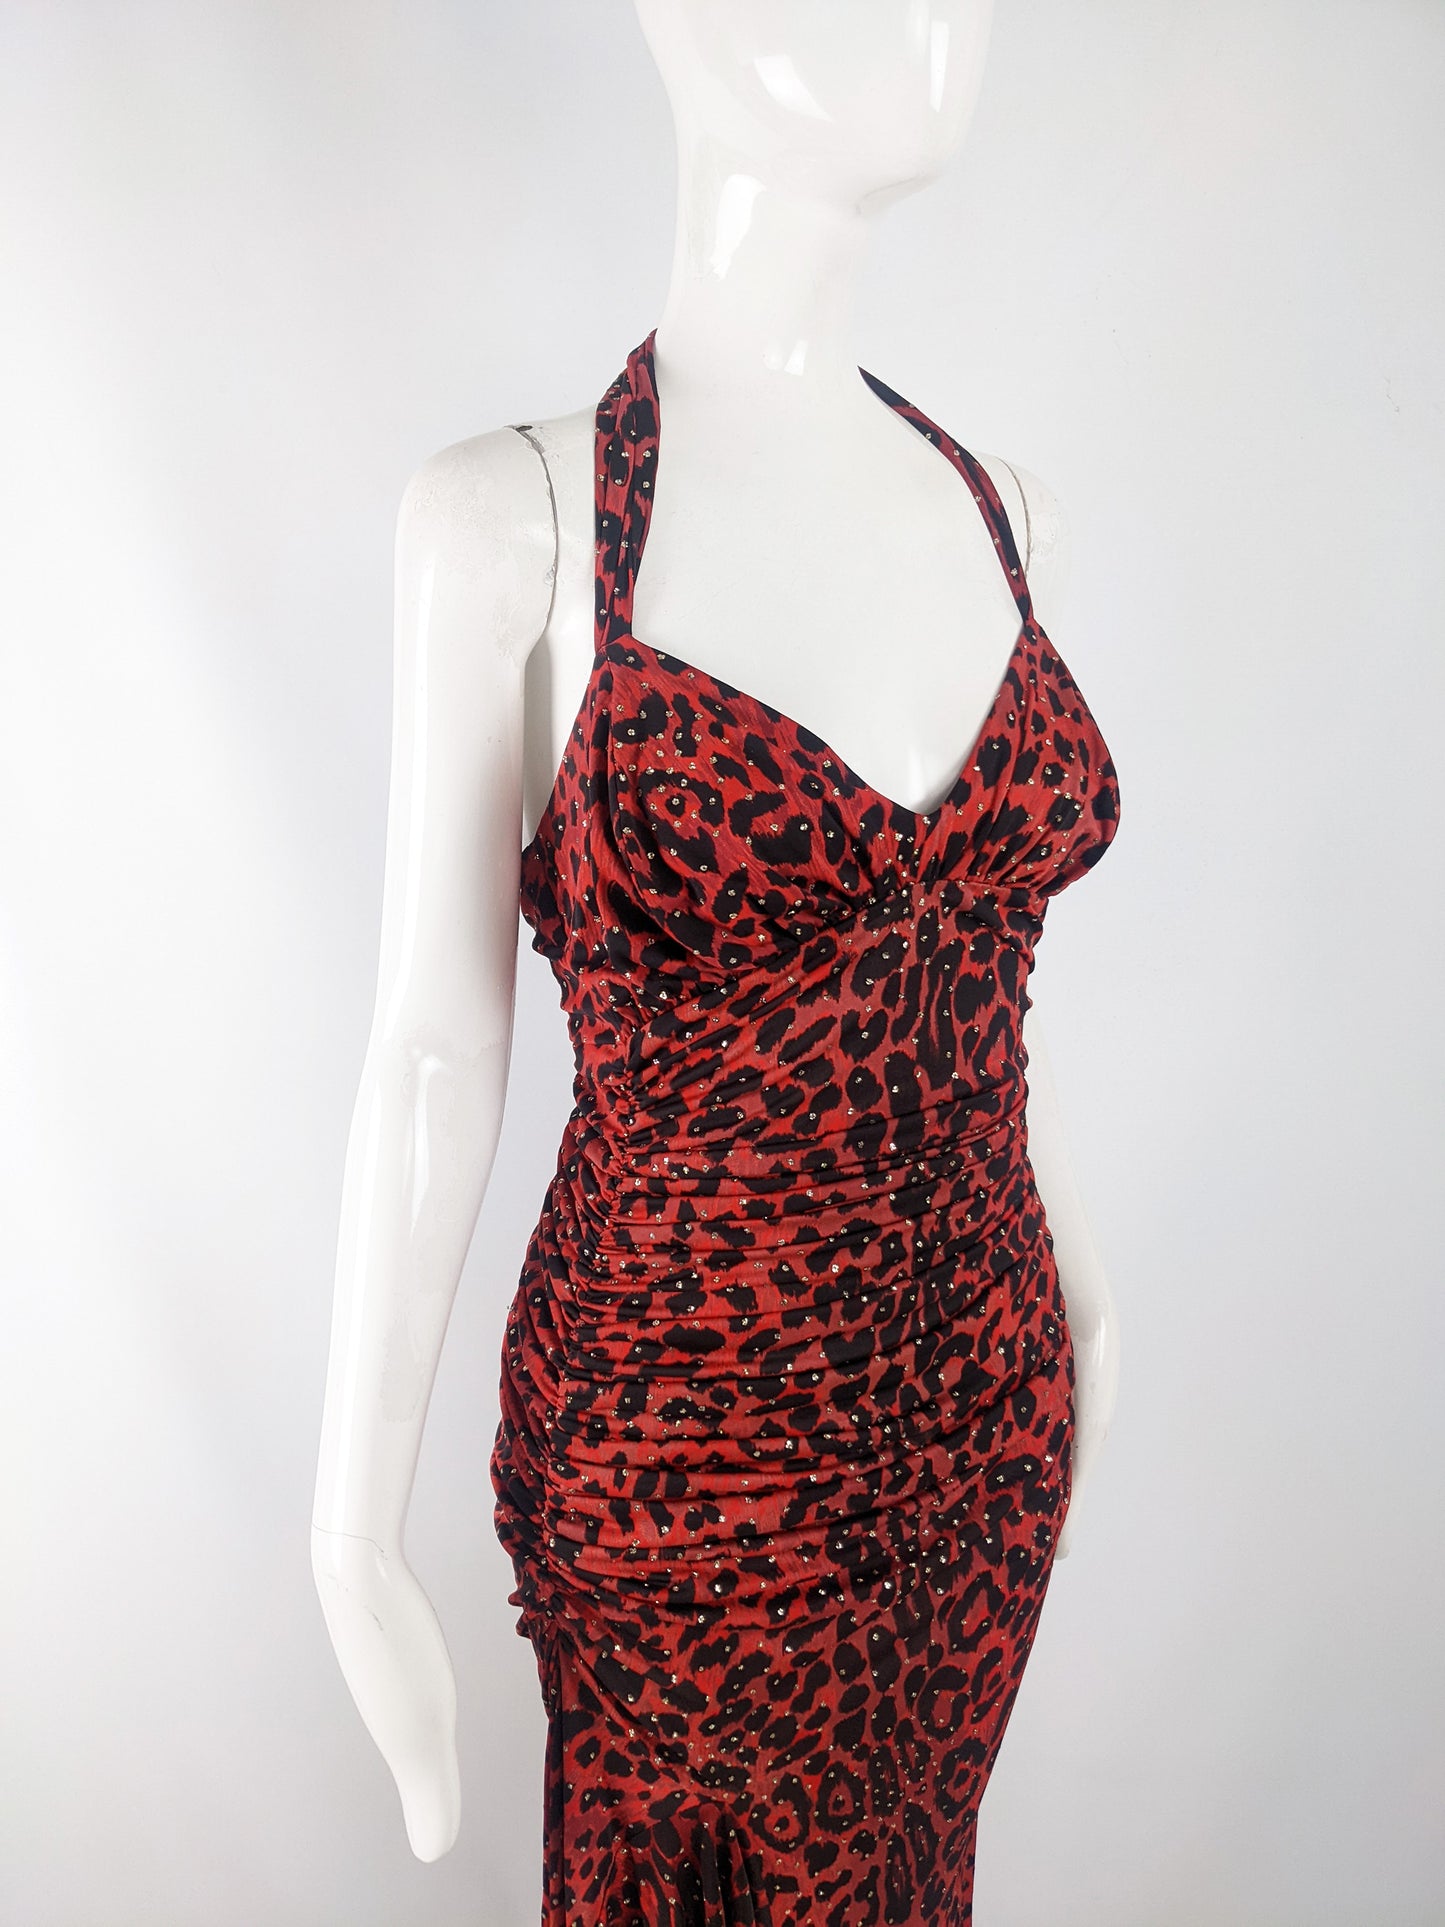 Francky Velucci Vintage Red Animal Print Evening Dress, 1990s